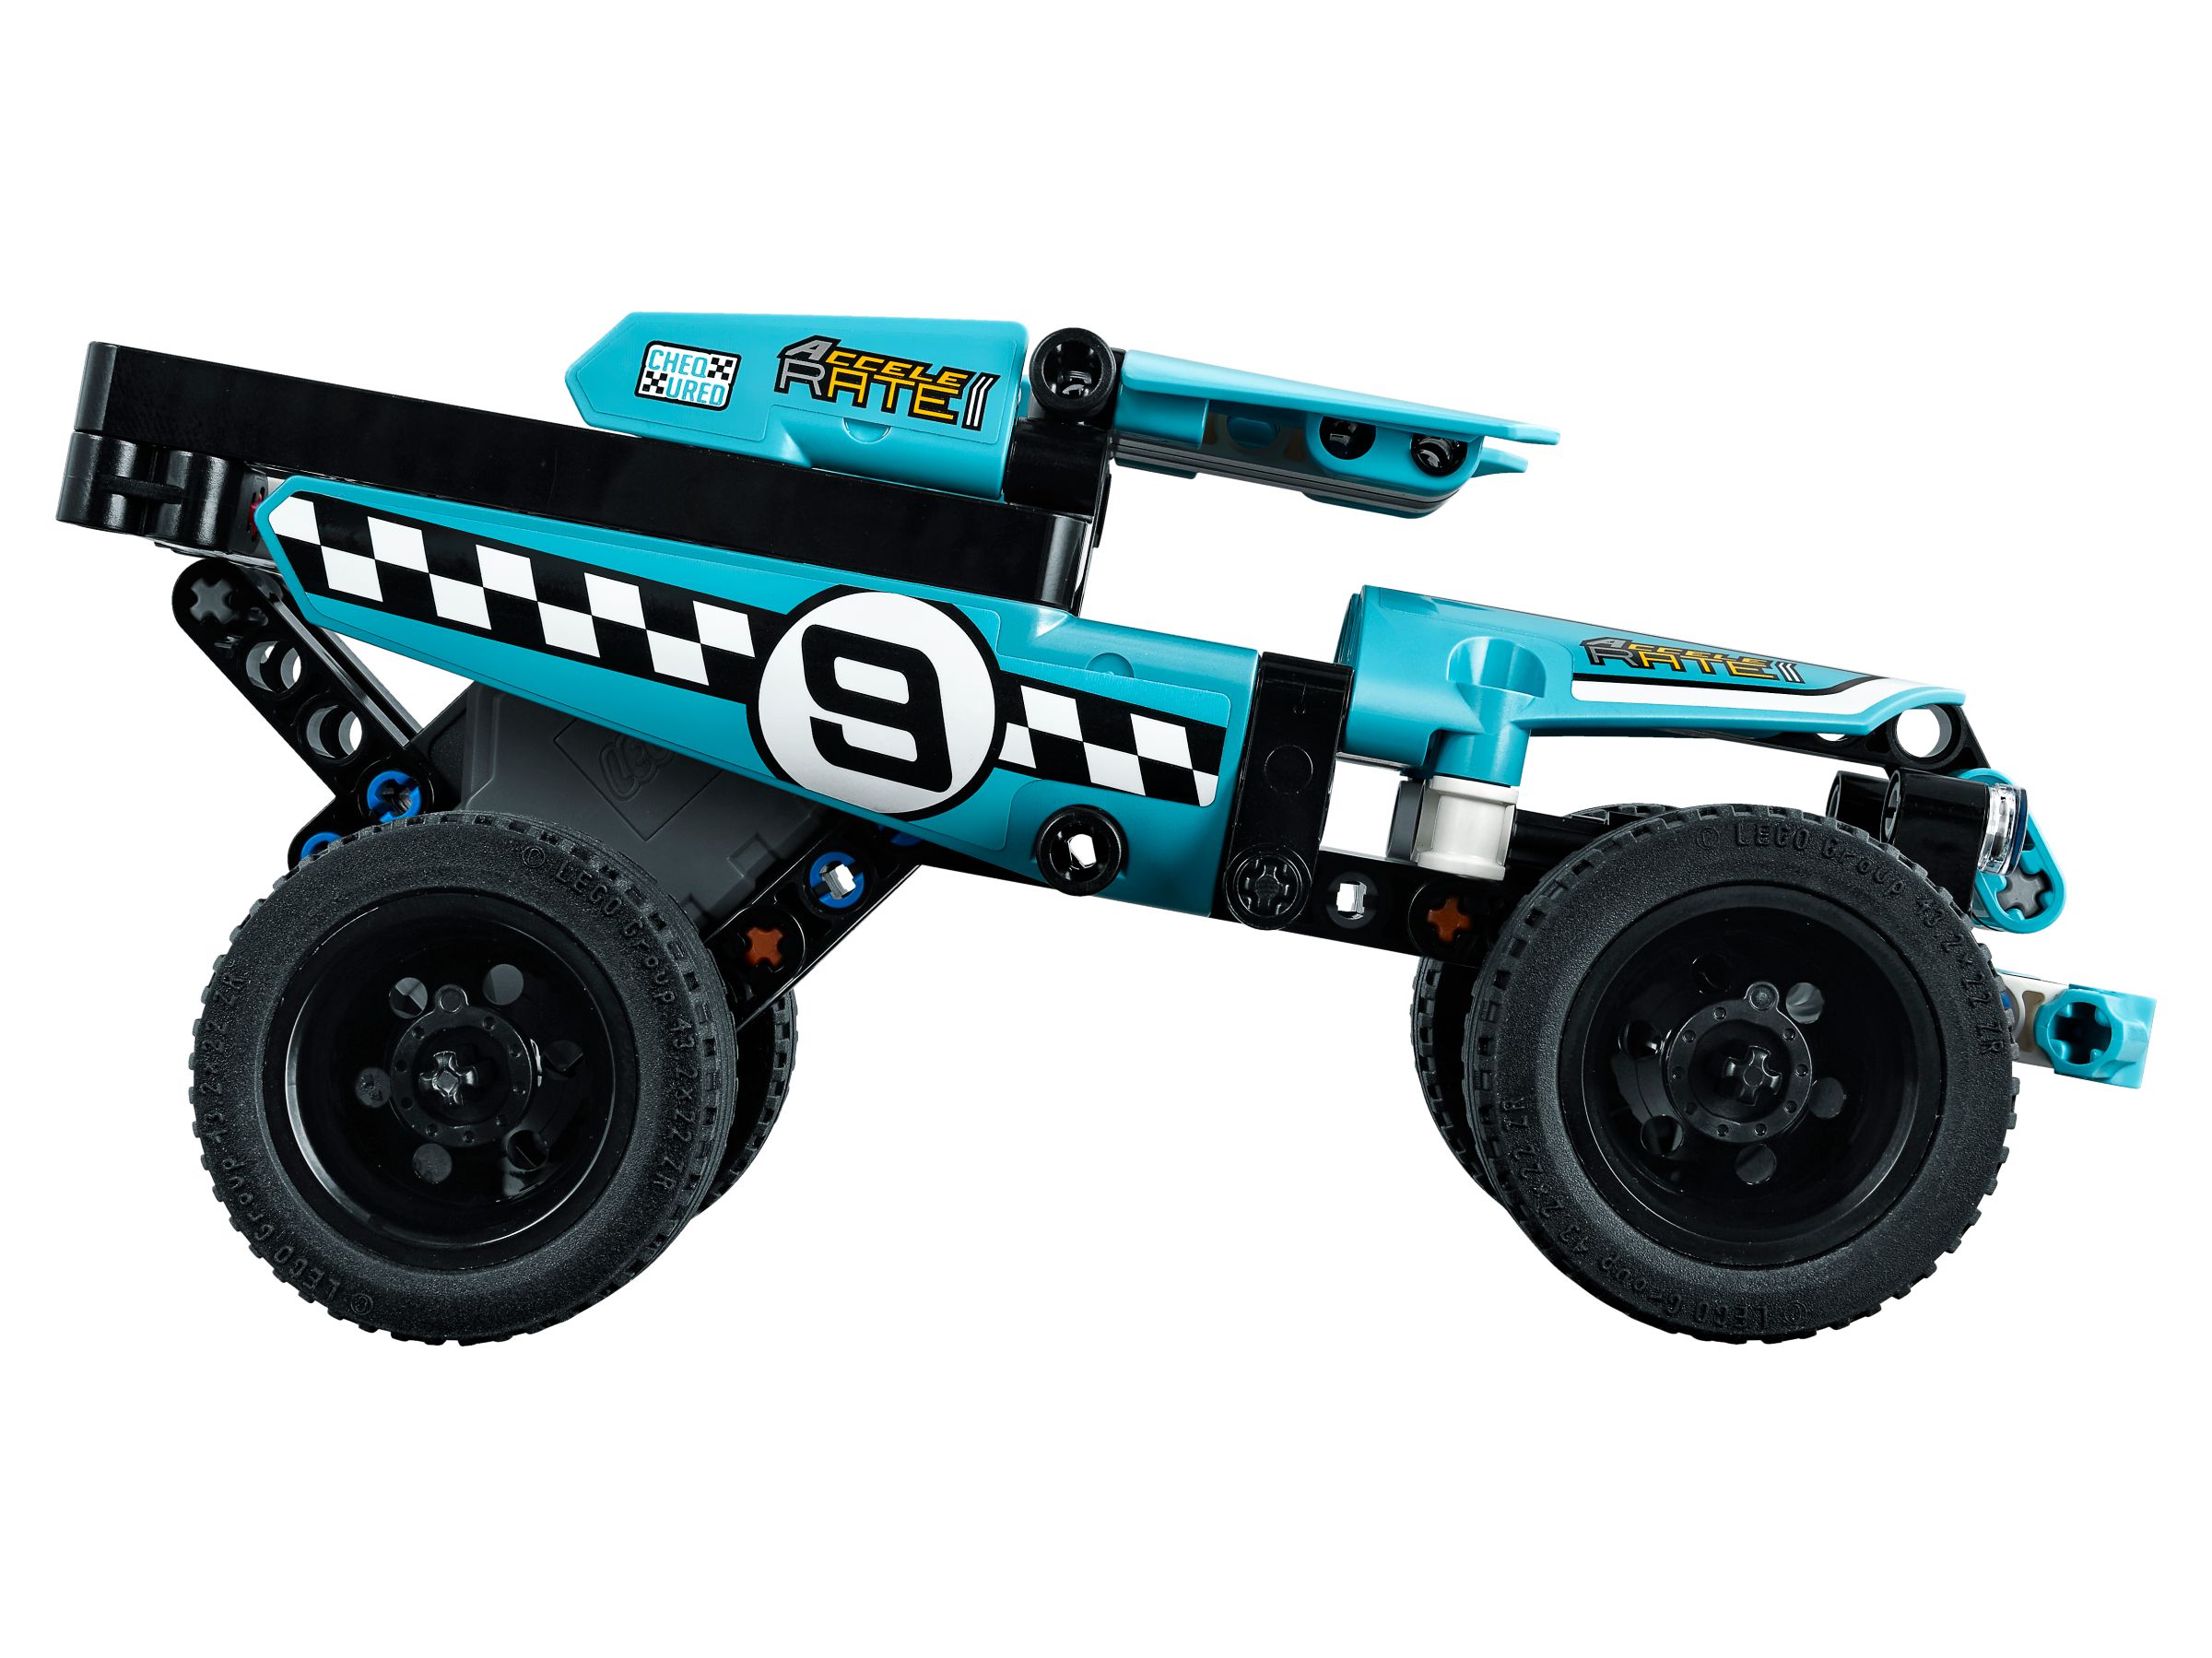 LEGO Technic 42059 Stunt-Truck LEGO_42059_alt3.jpg